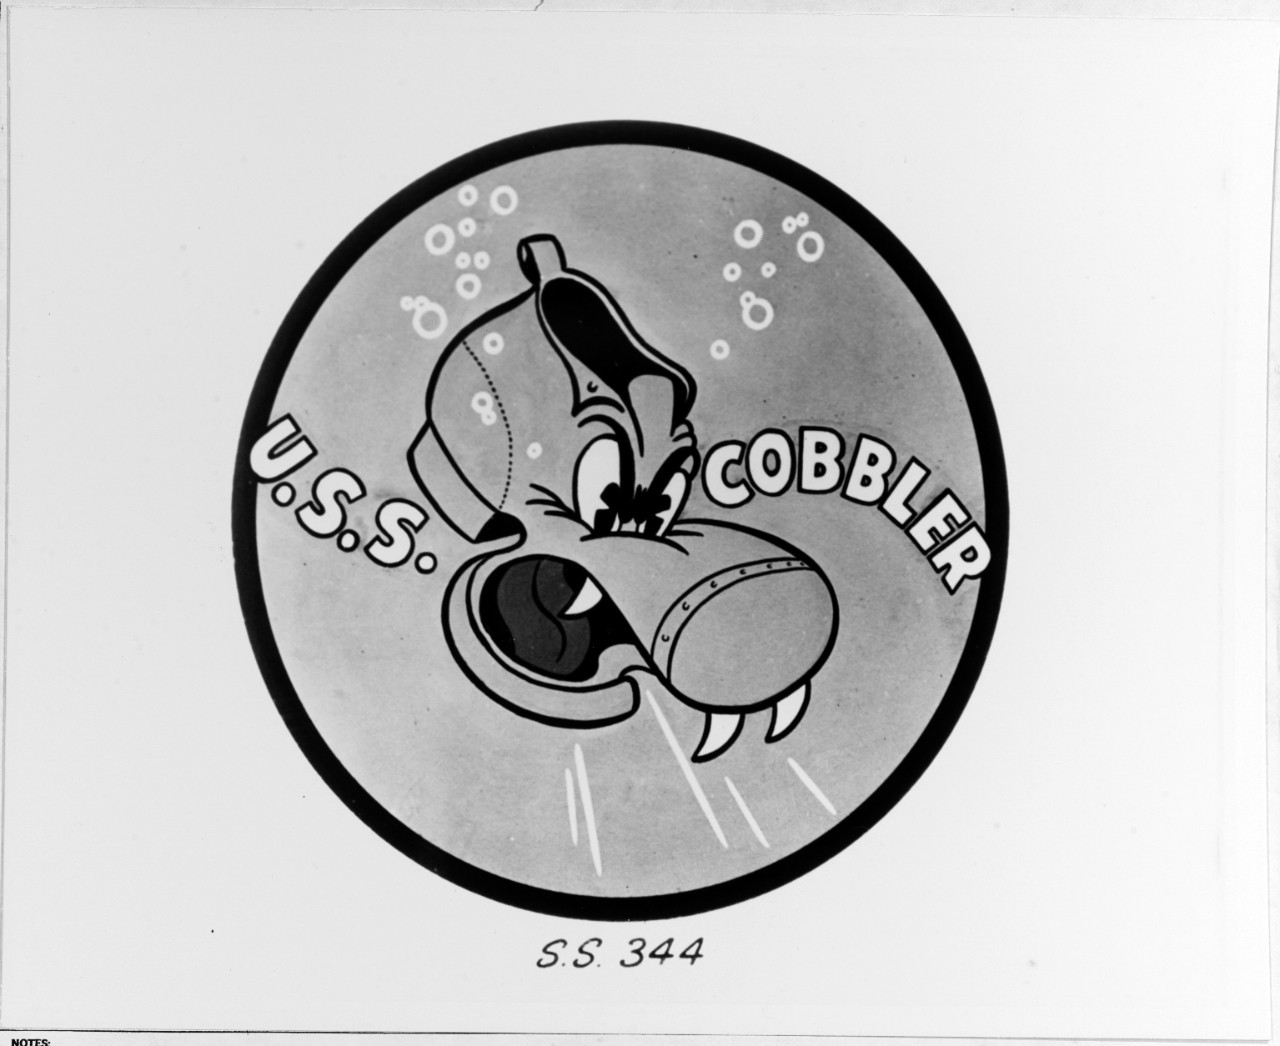 Insignia:  USS COBBLER (SS-344)